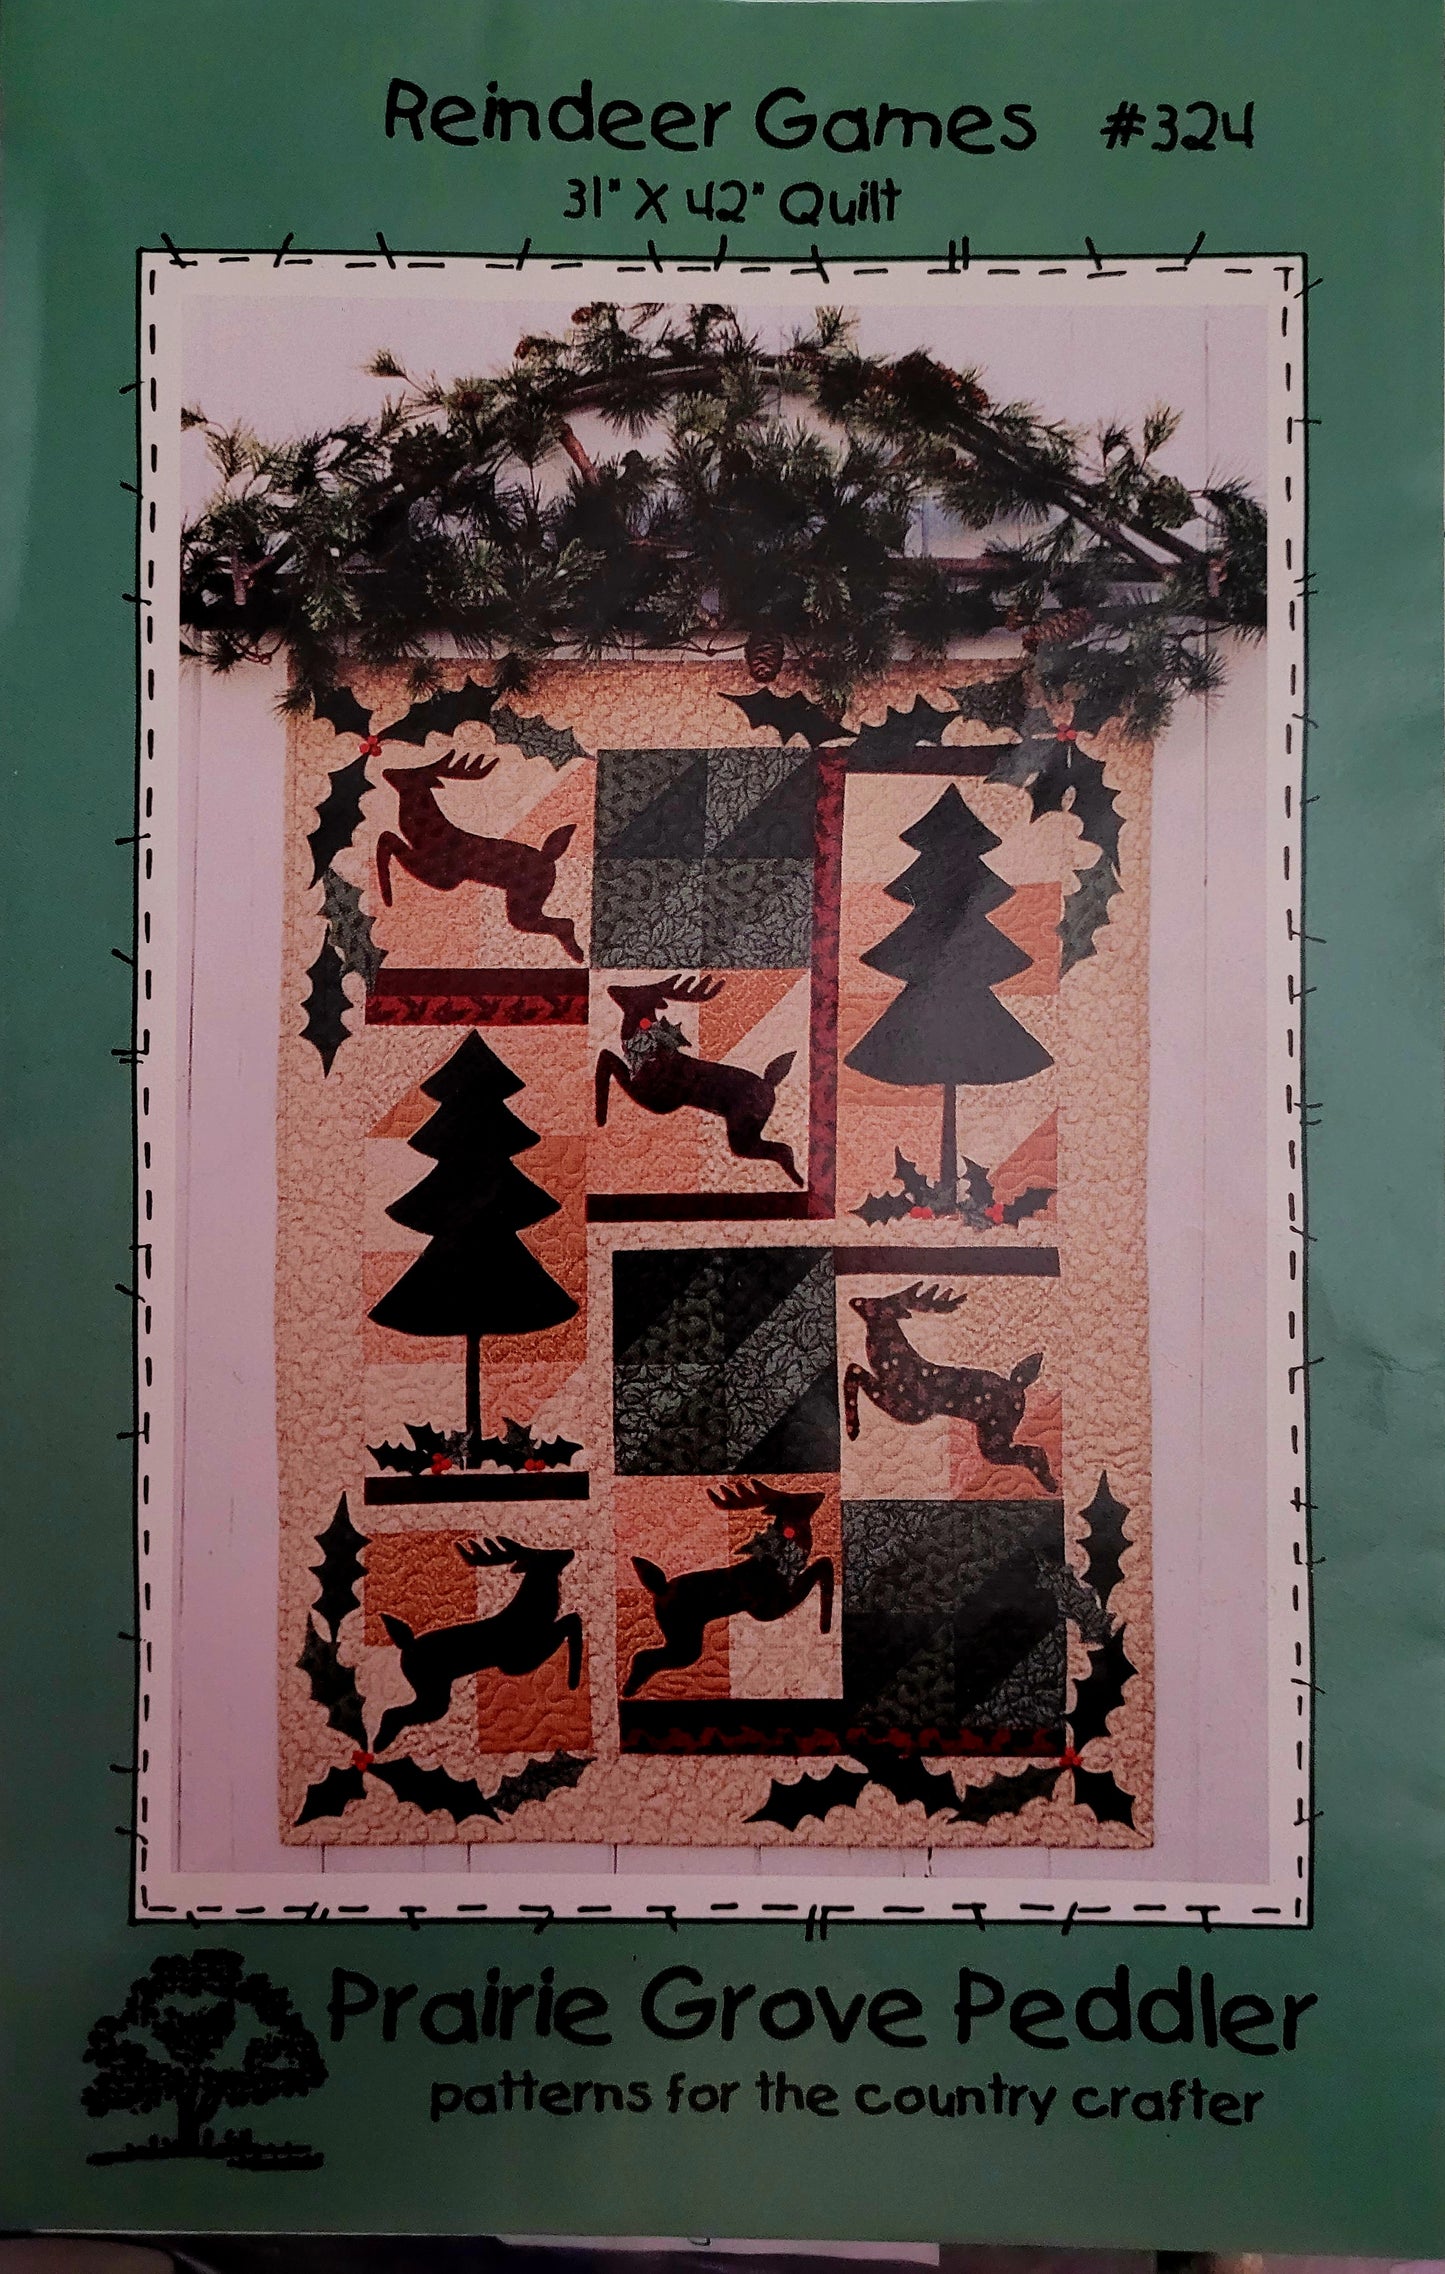 New *Reindeer Games 31" x 42" Quilt Pattern & Material